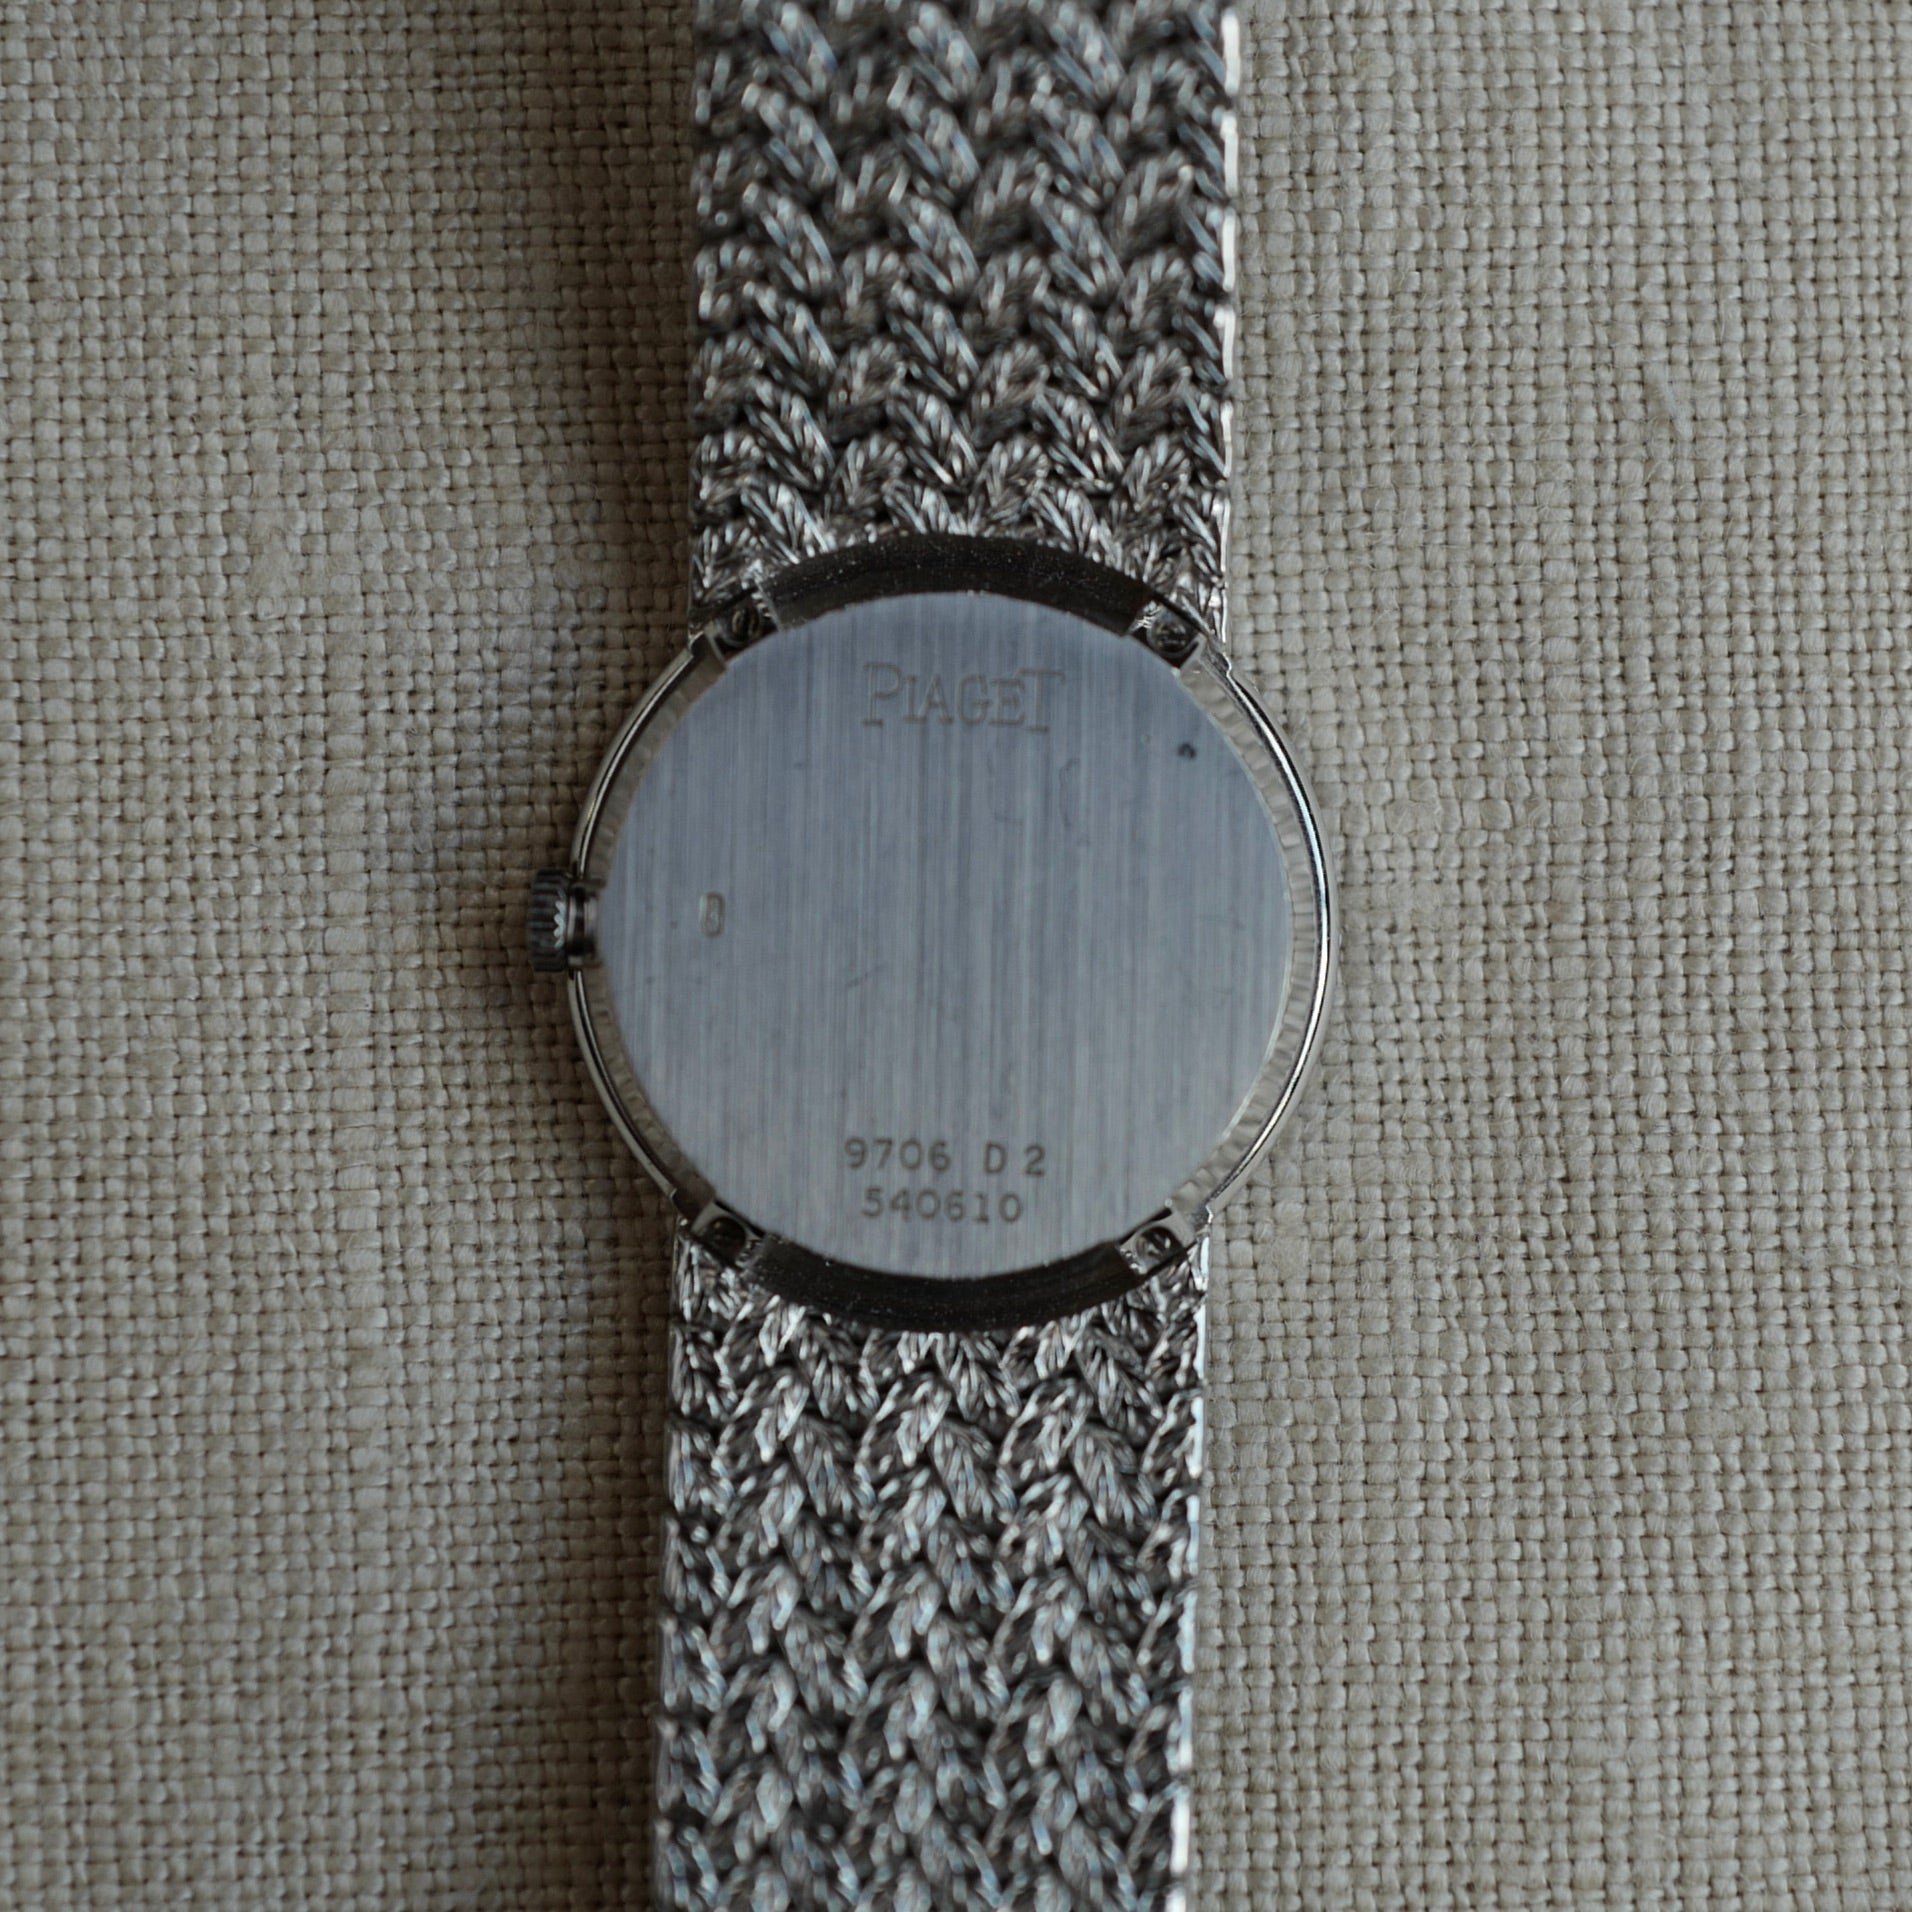 Piaget - Piaget White Gold Diamond Opal Watch Ref. 9706 - The Keystone Watches